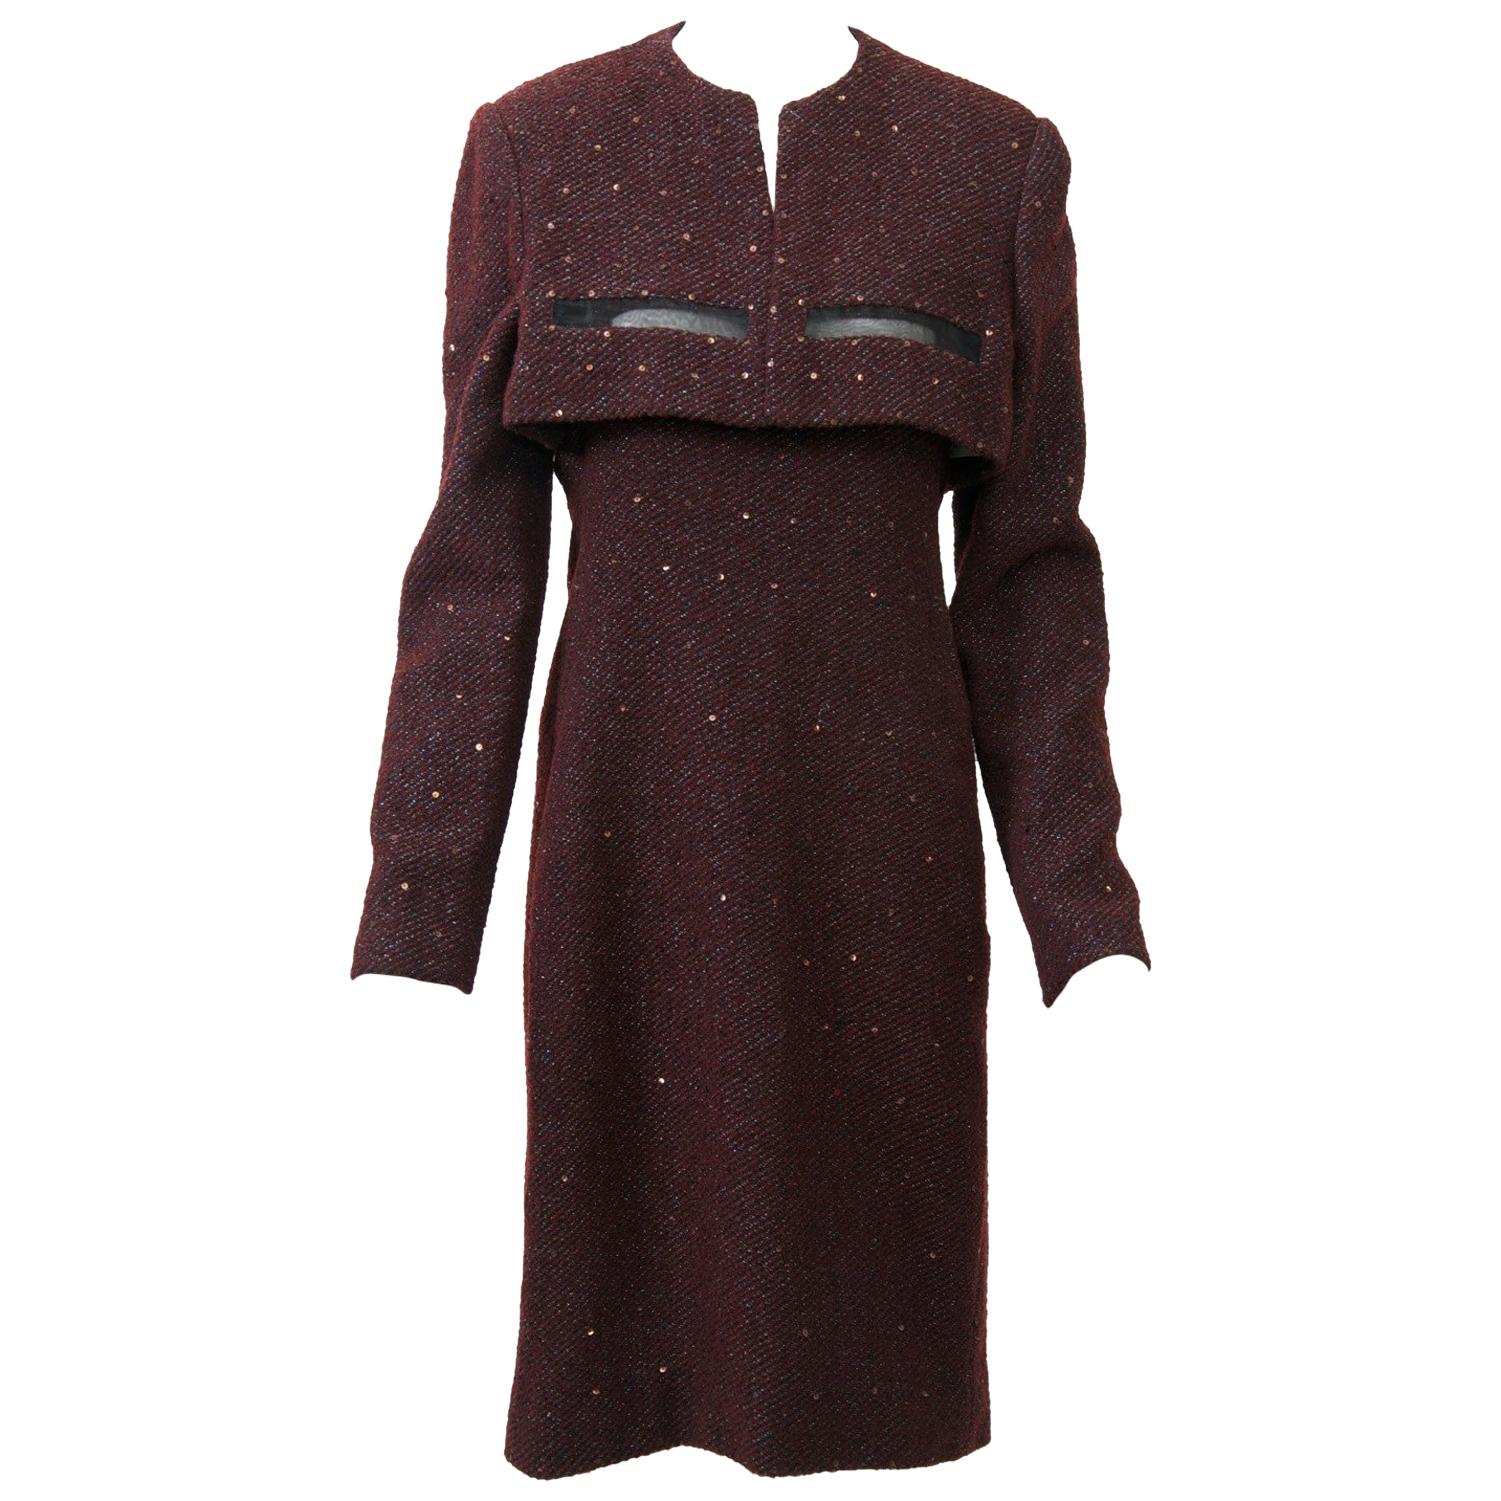 Geoffrey Beene Burgundy/Metallic Dress and Jacket